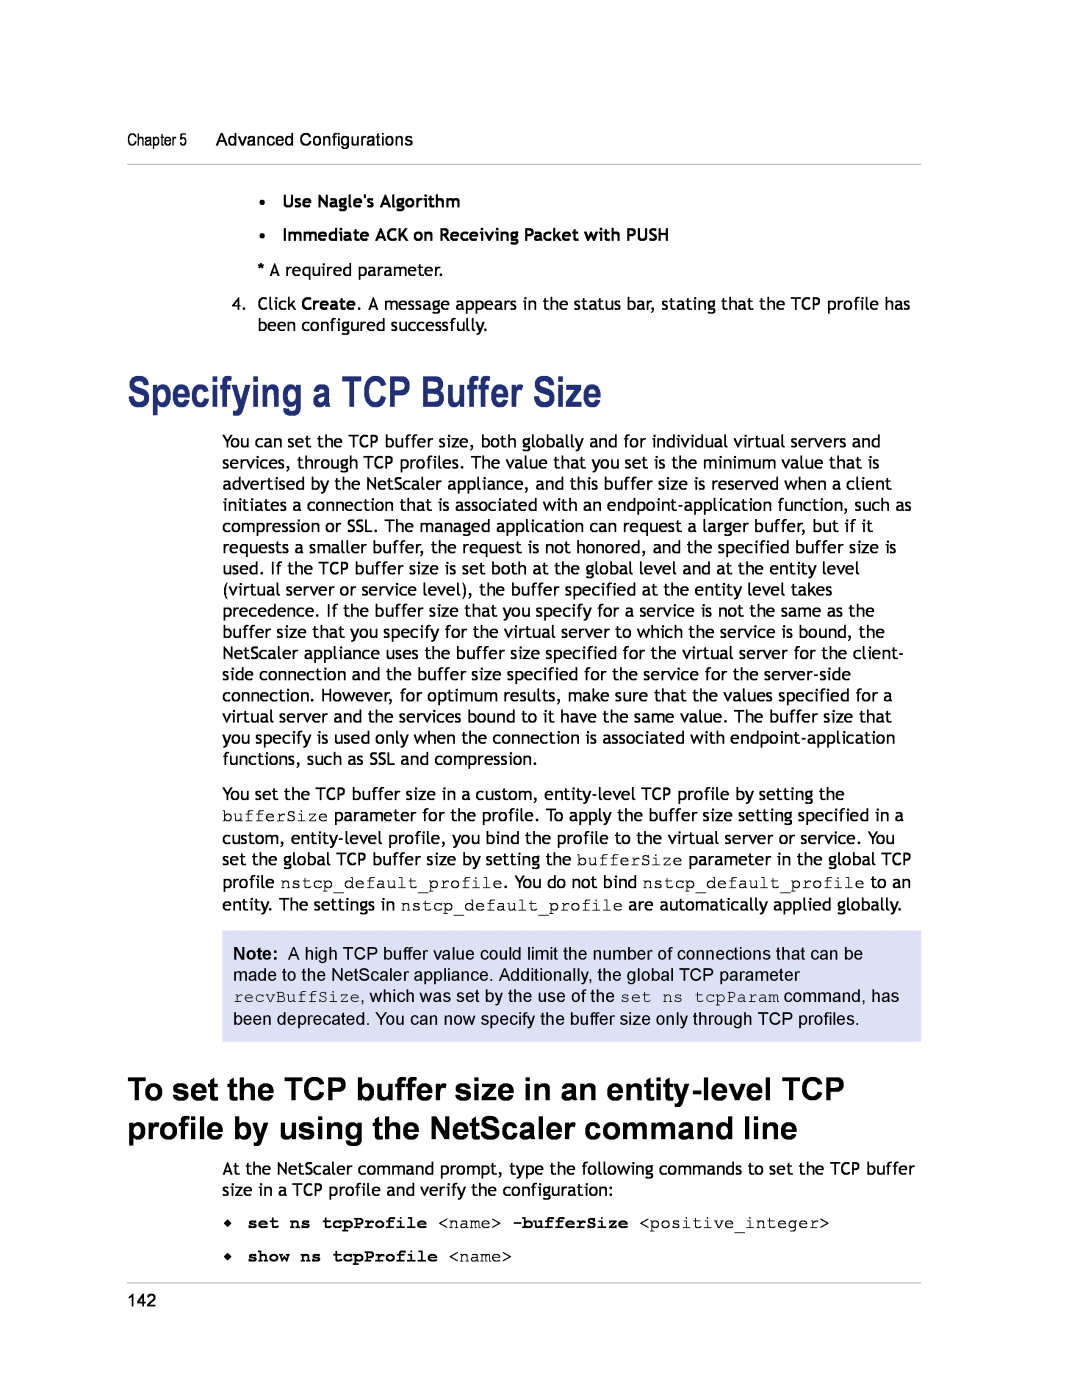 Citrix Systems CITRIX NETSCALER 9.3 Specifying a TCP Buffer Size, w set ns tcpProfile name -bufferSize positiveinteger 